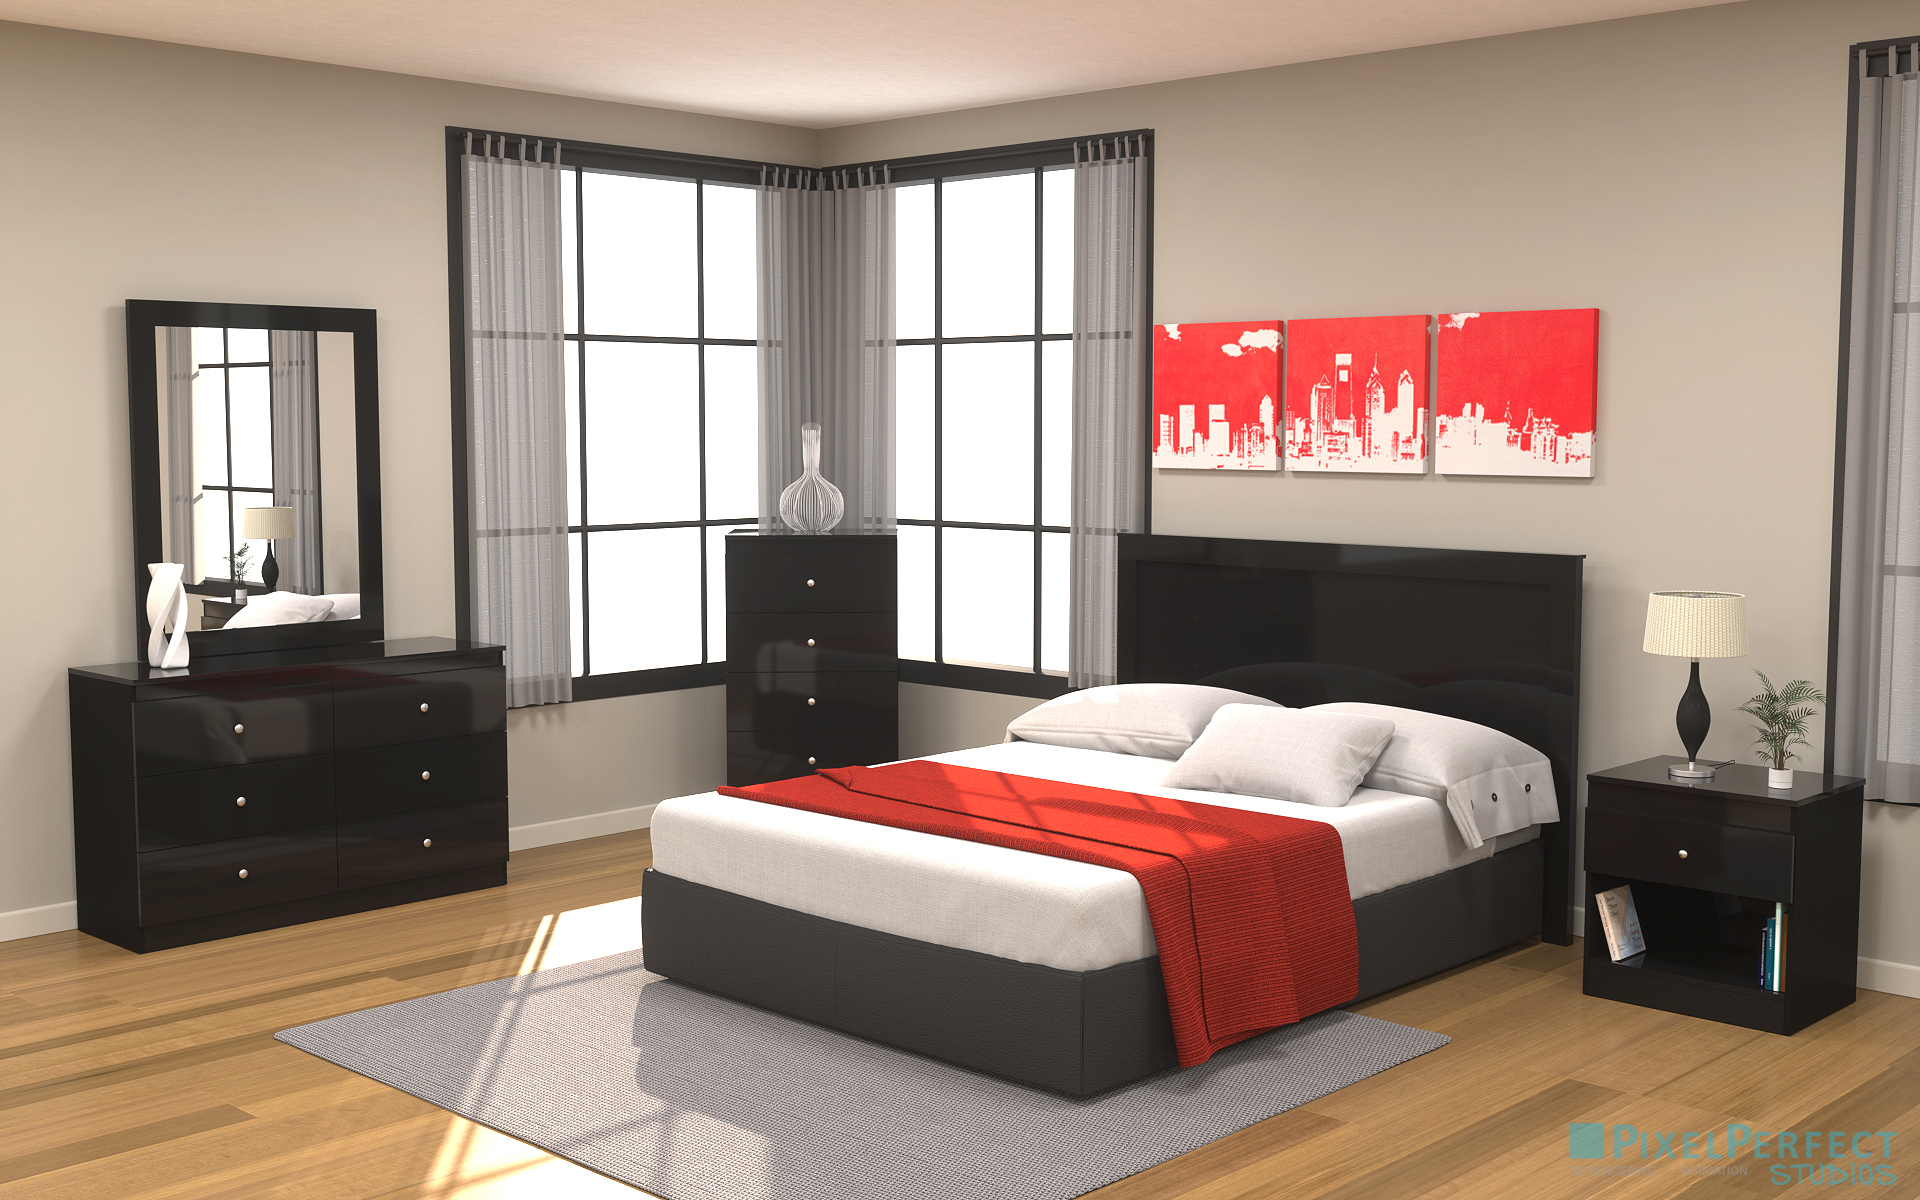 bedroom red